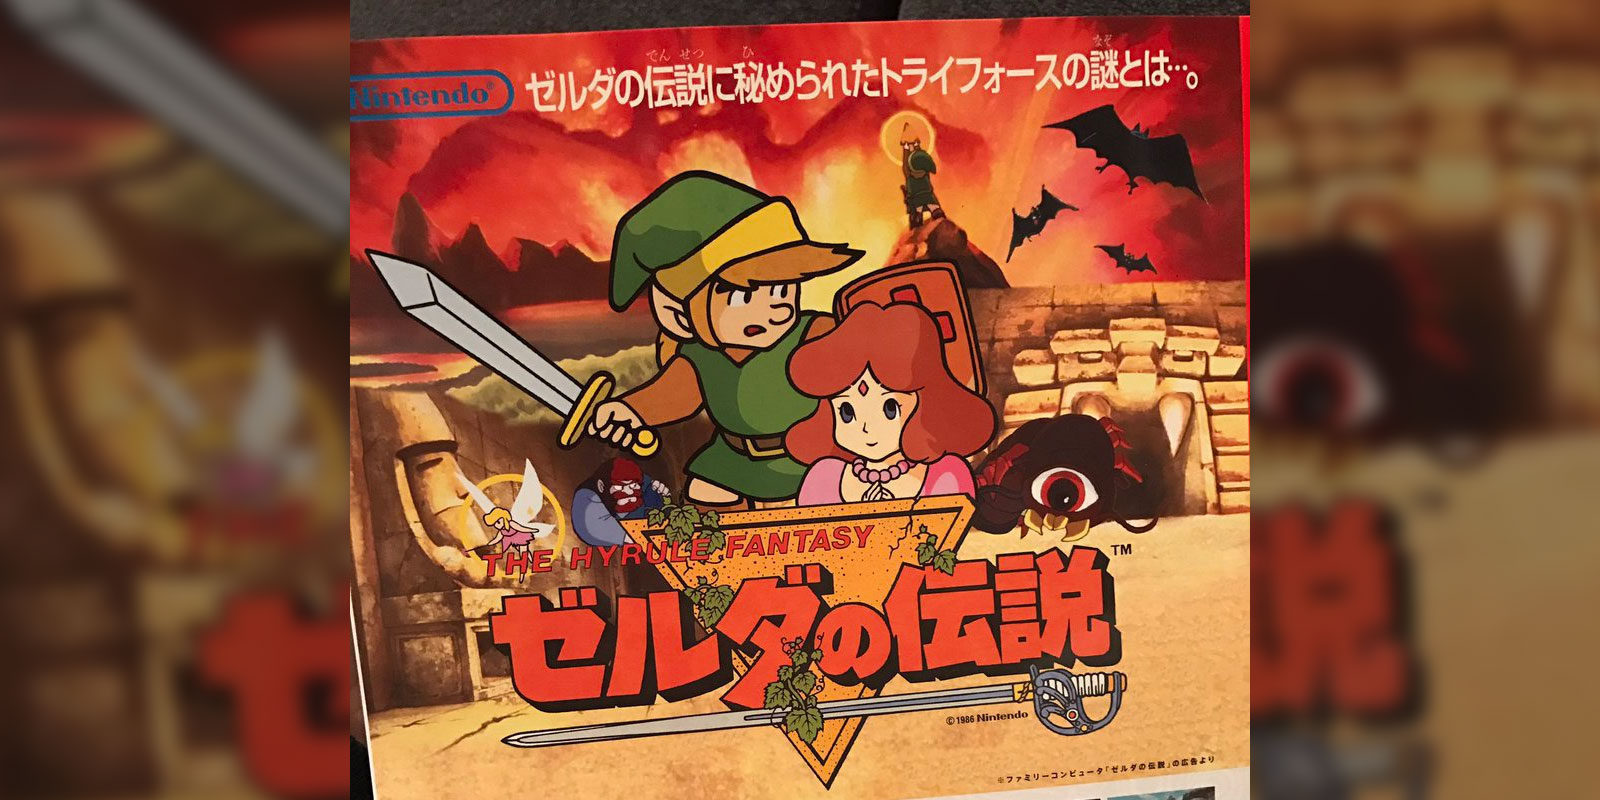 'The Legend of Zelda: Breath of the Wild' evoca nostalgia en este anuncio